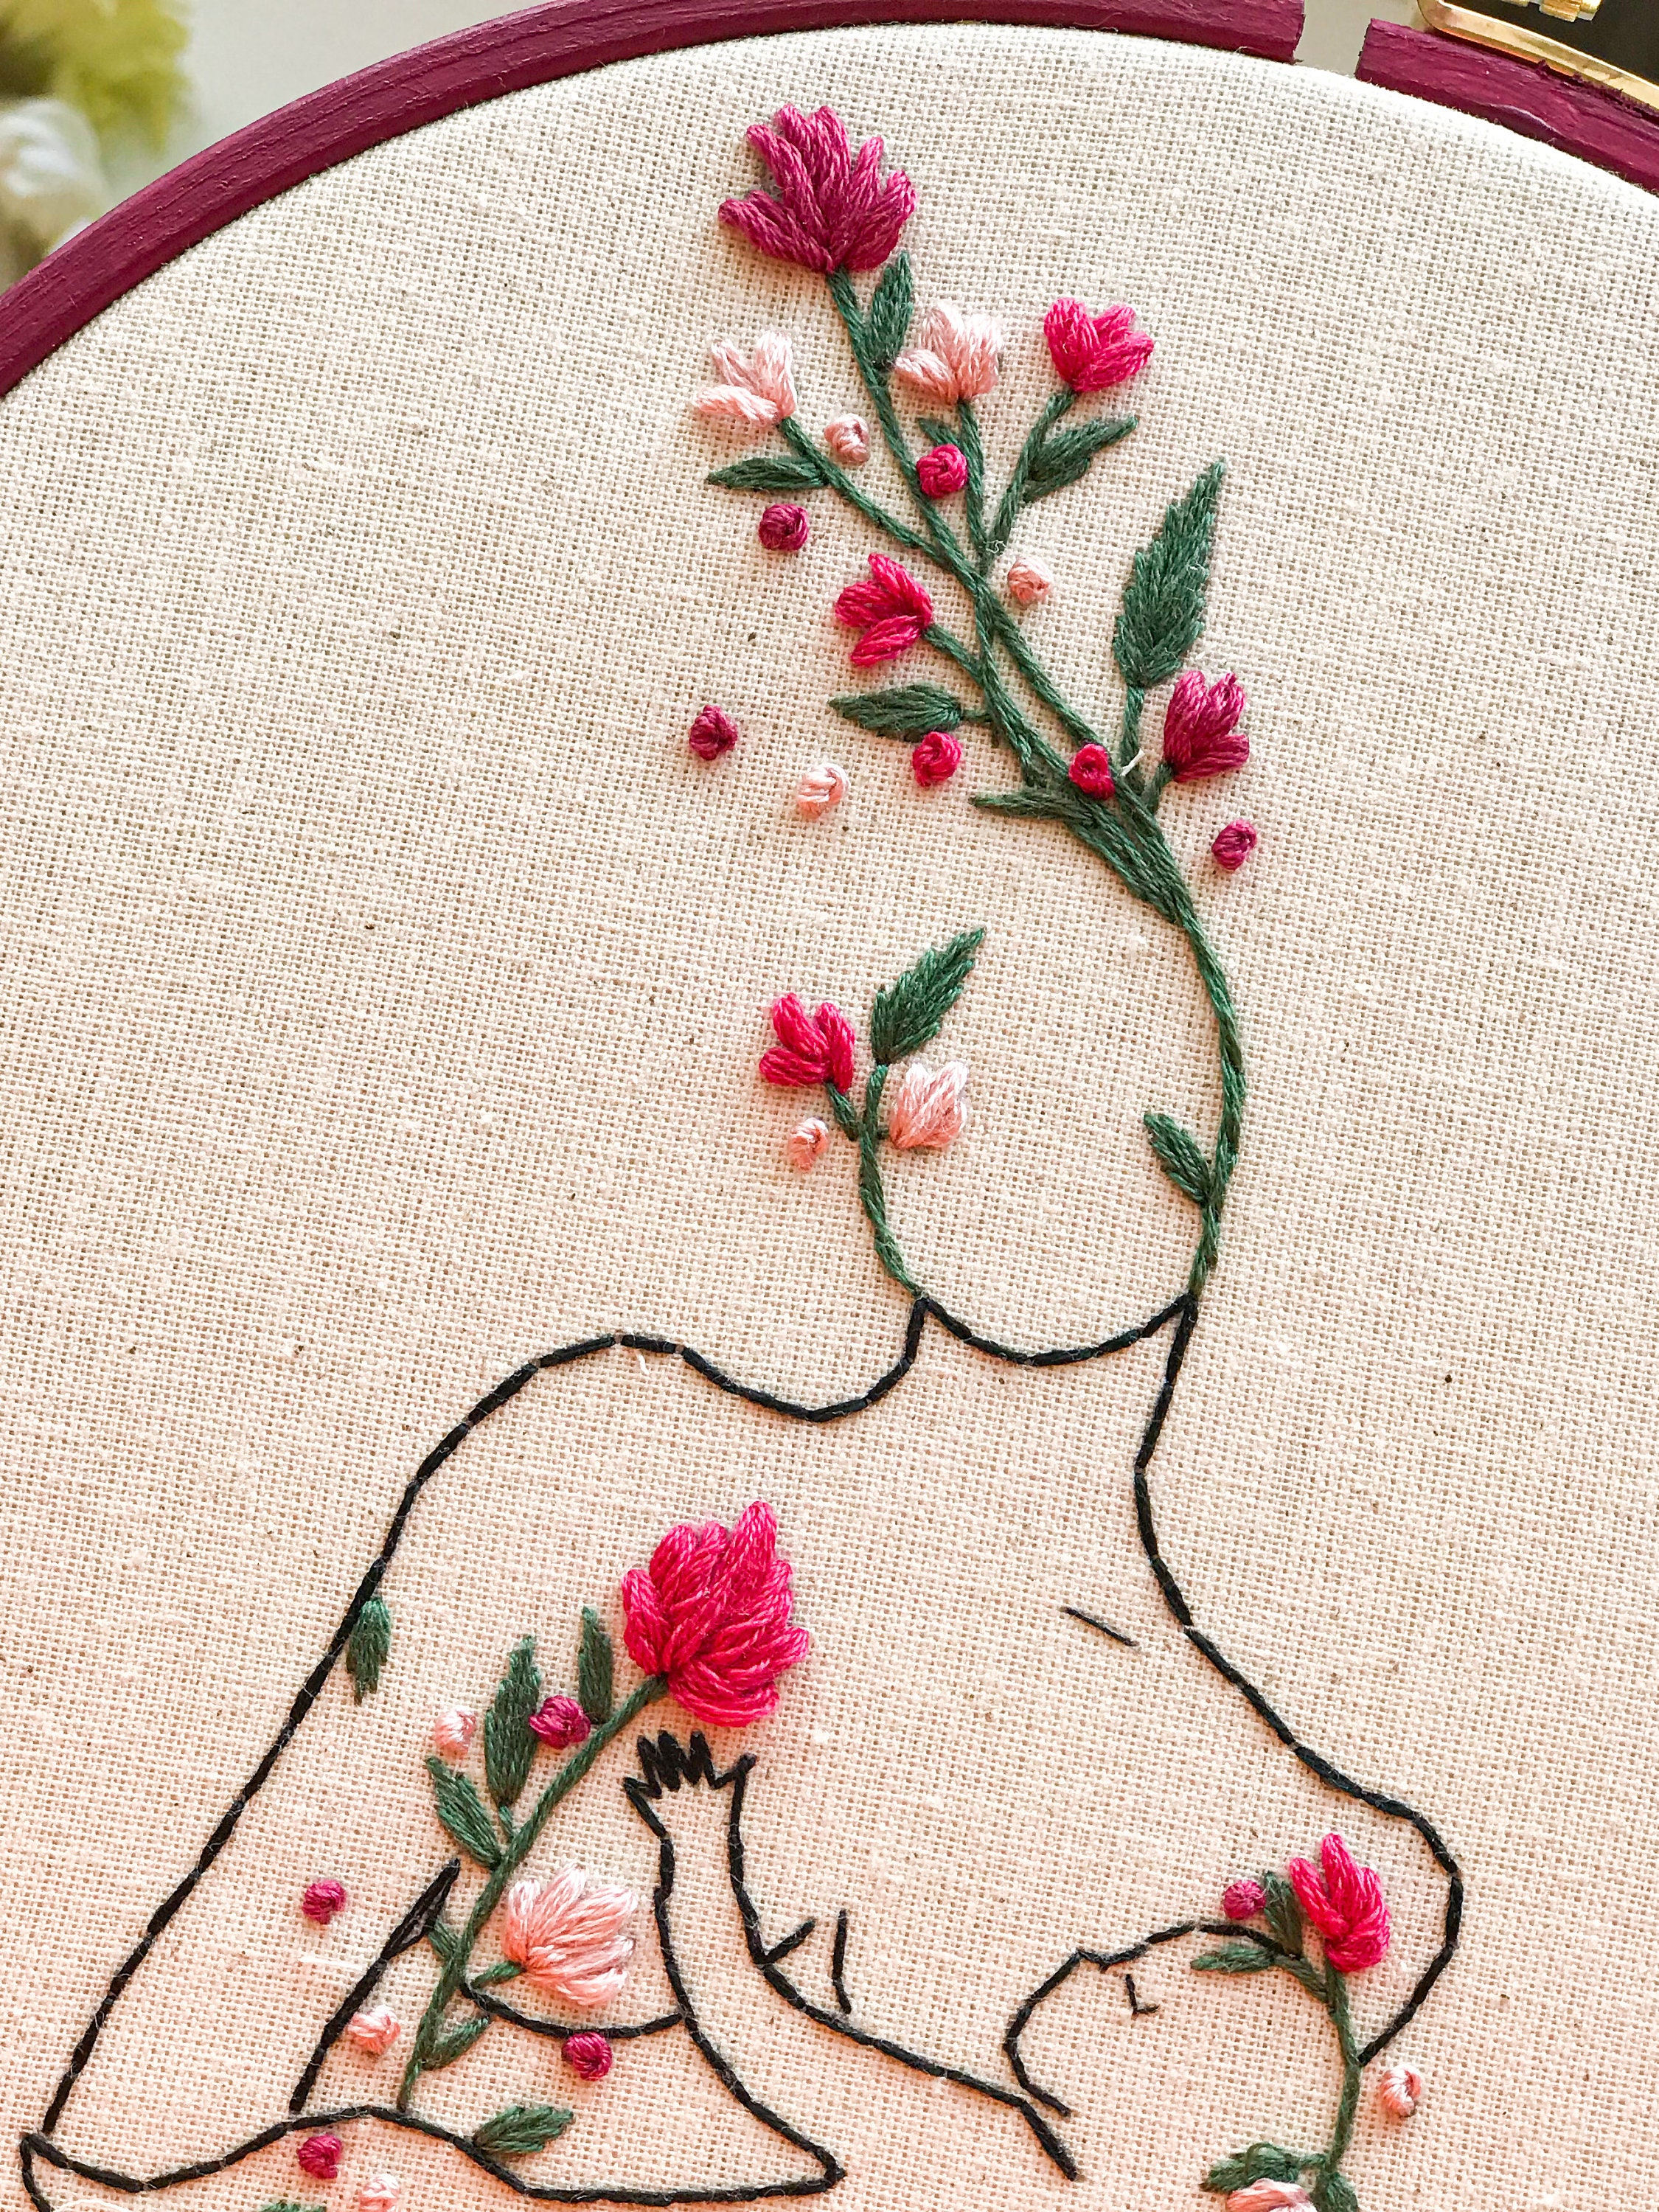 Floral Ribbon Name Hoop – KimArt Designs